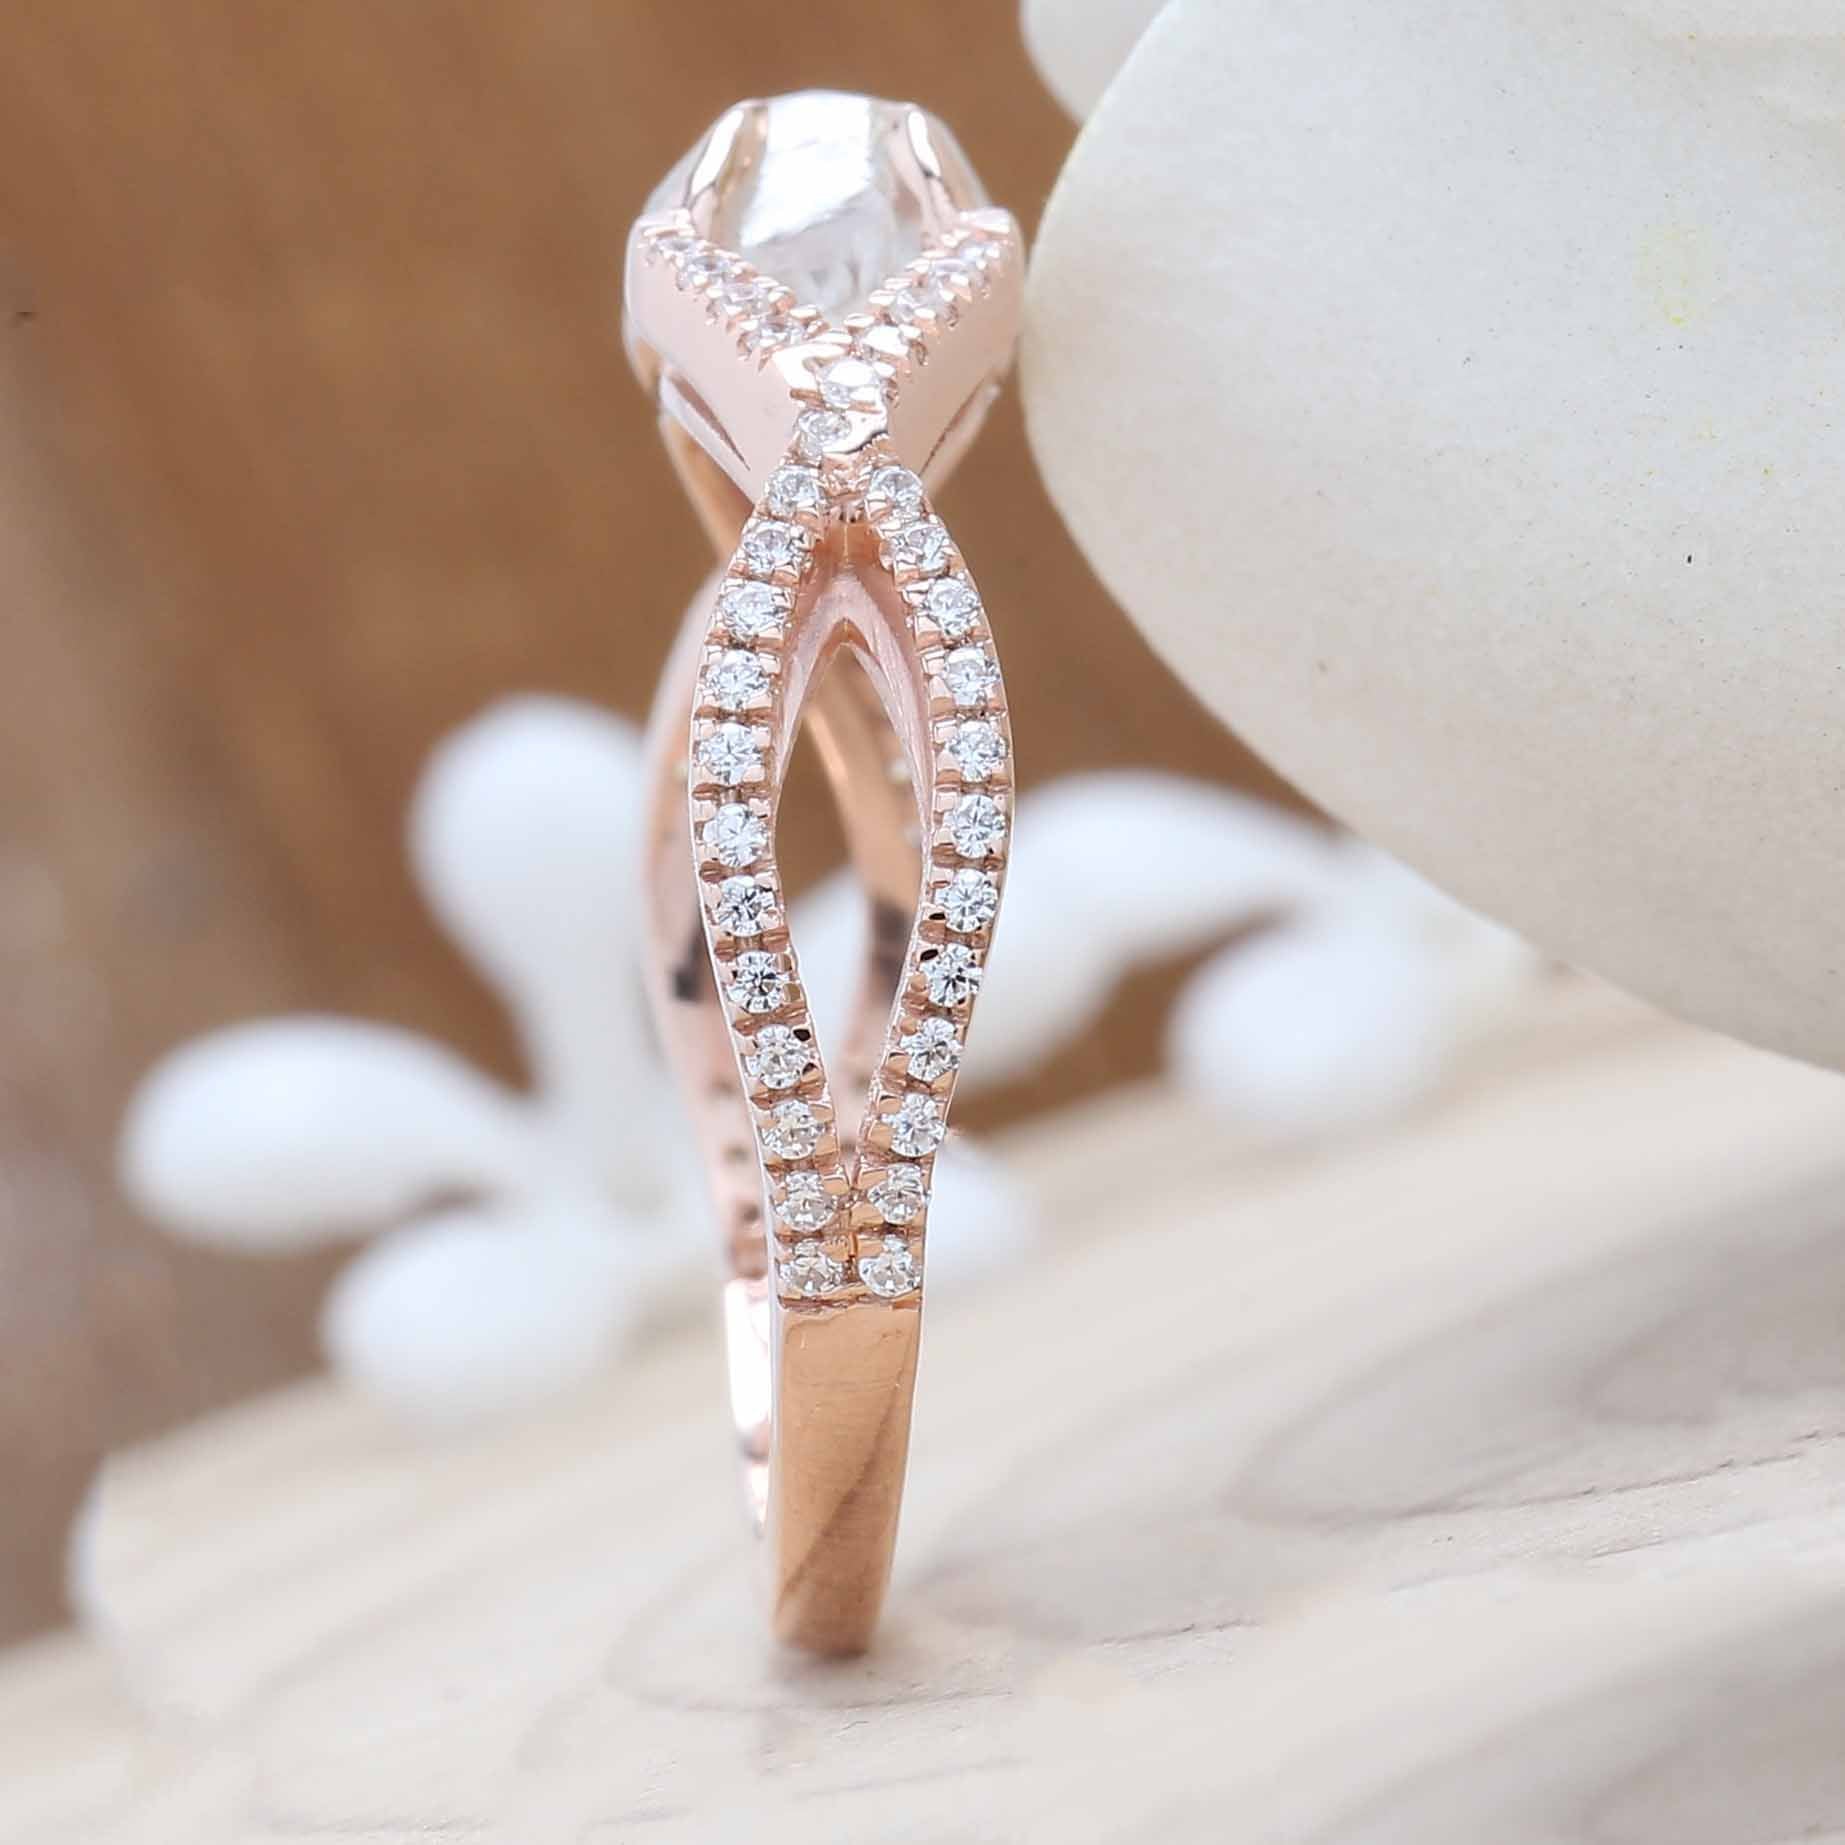 White Rough Diamond 14K Solid Rose White Yellow Gold Ring Engagement Wedding Gift Ring KD877